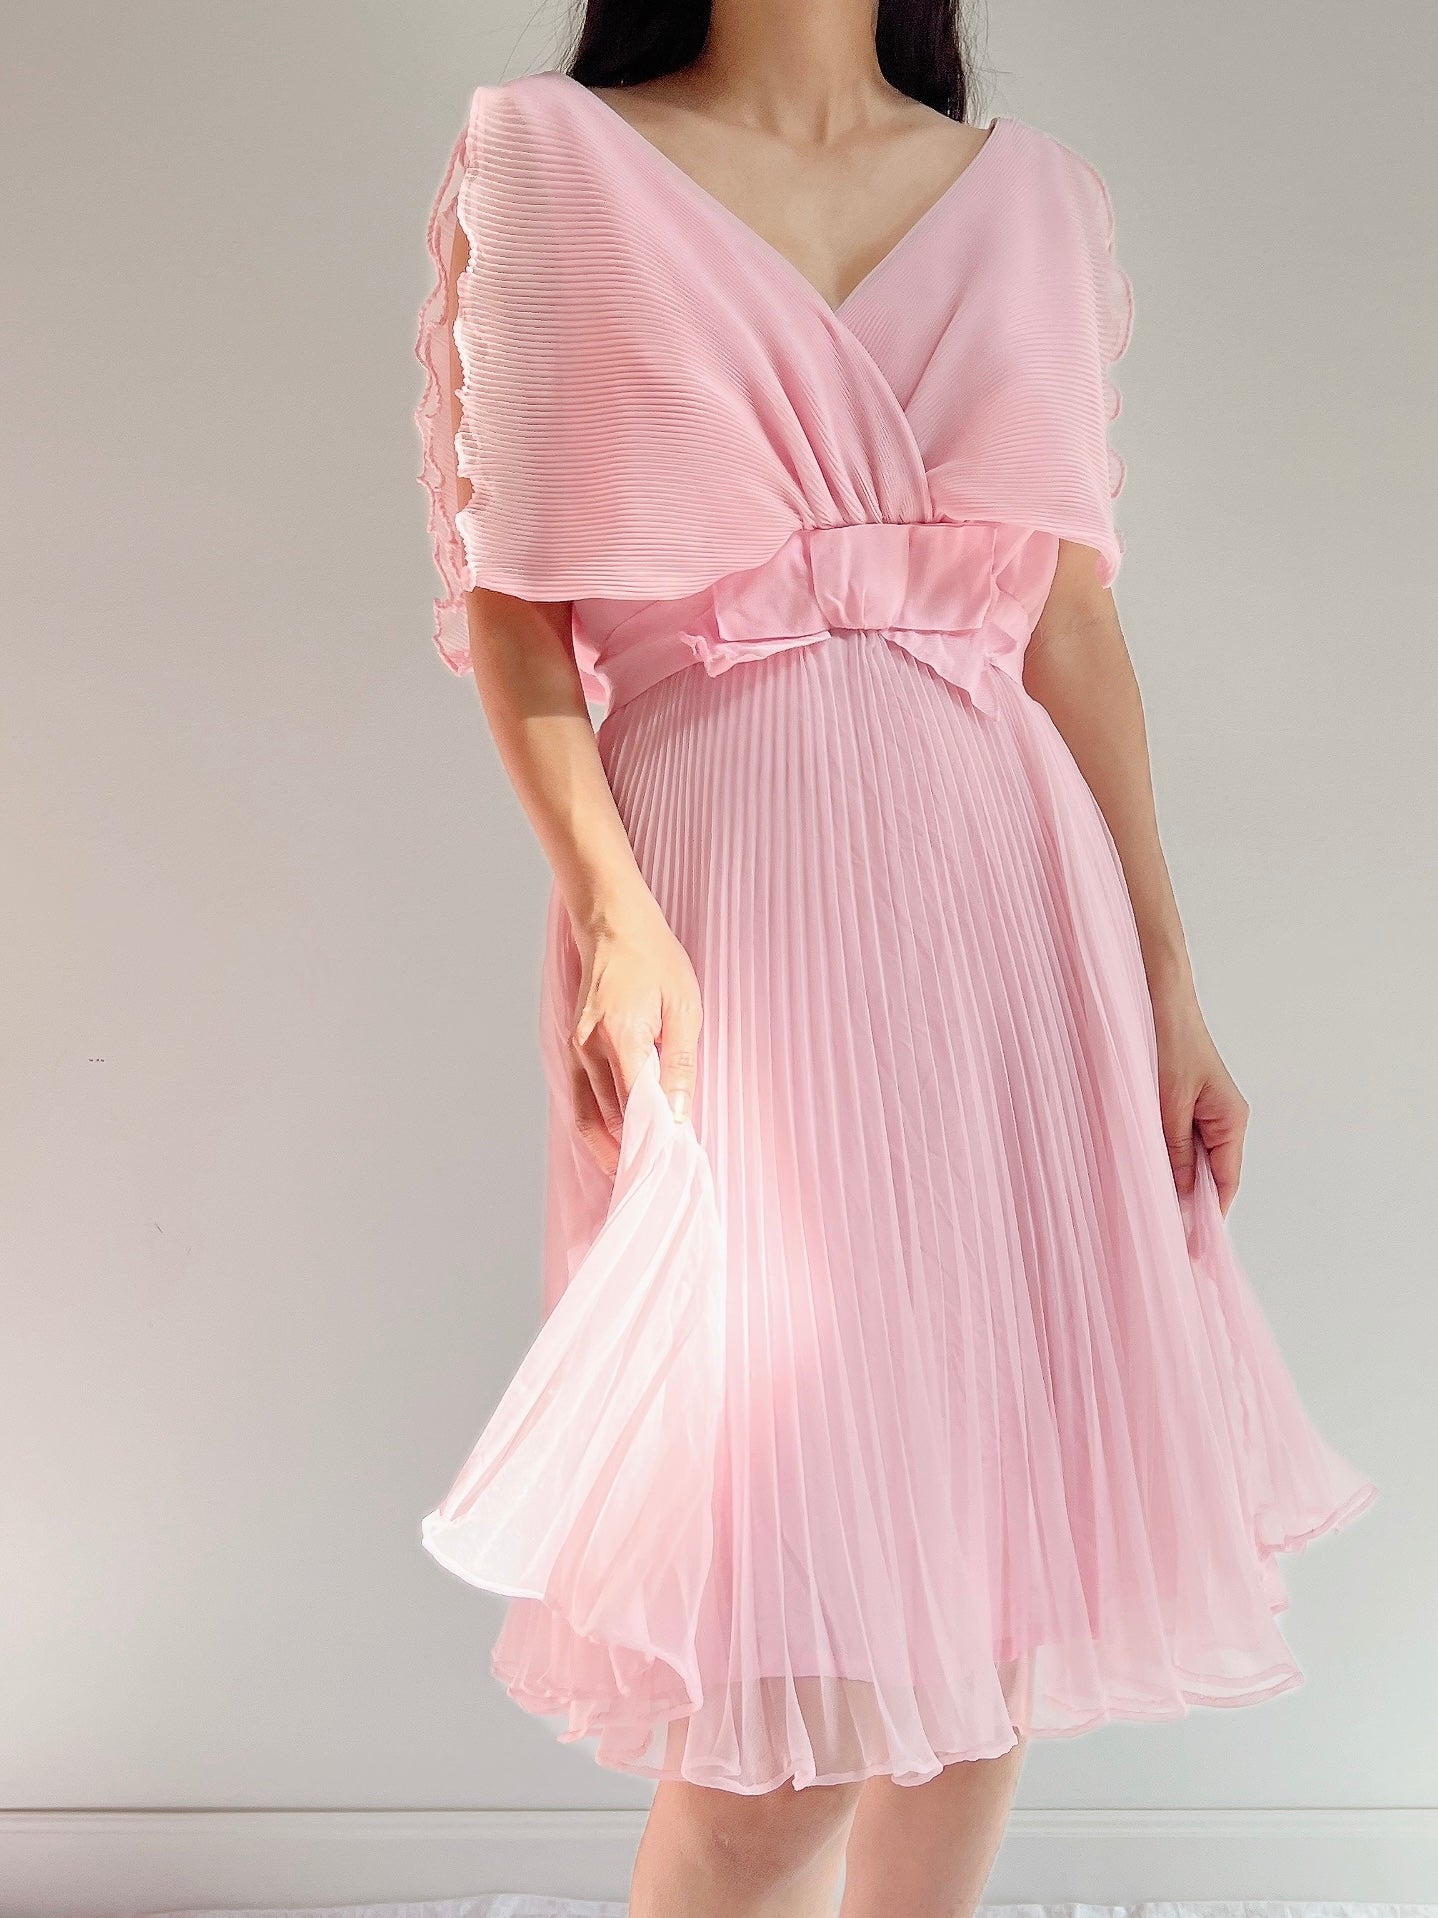 1960s Pleated Chiffon Dress - S